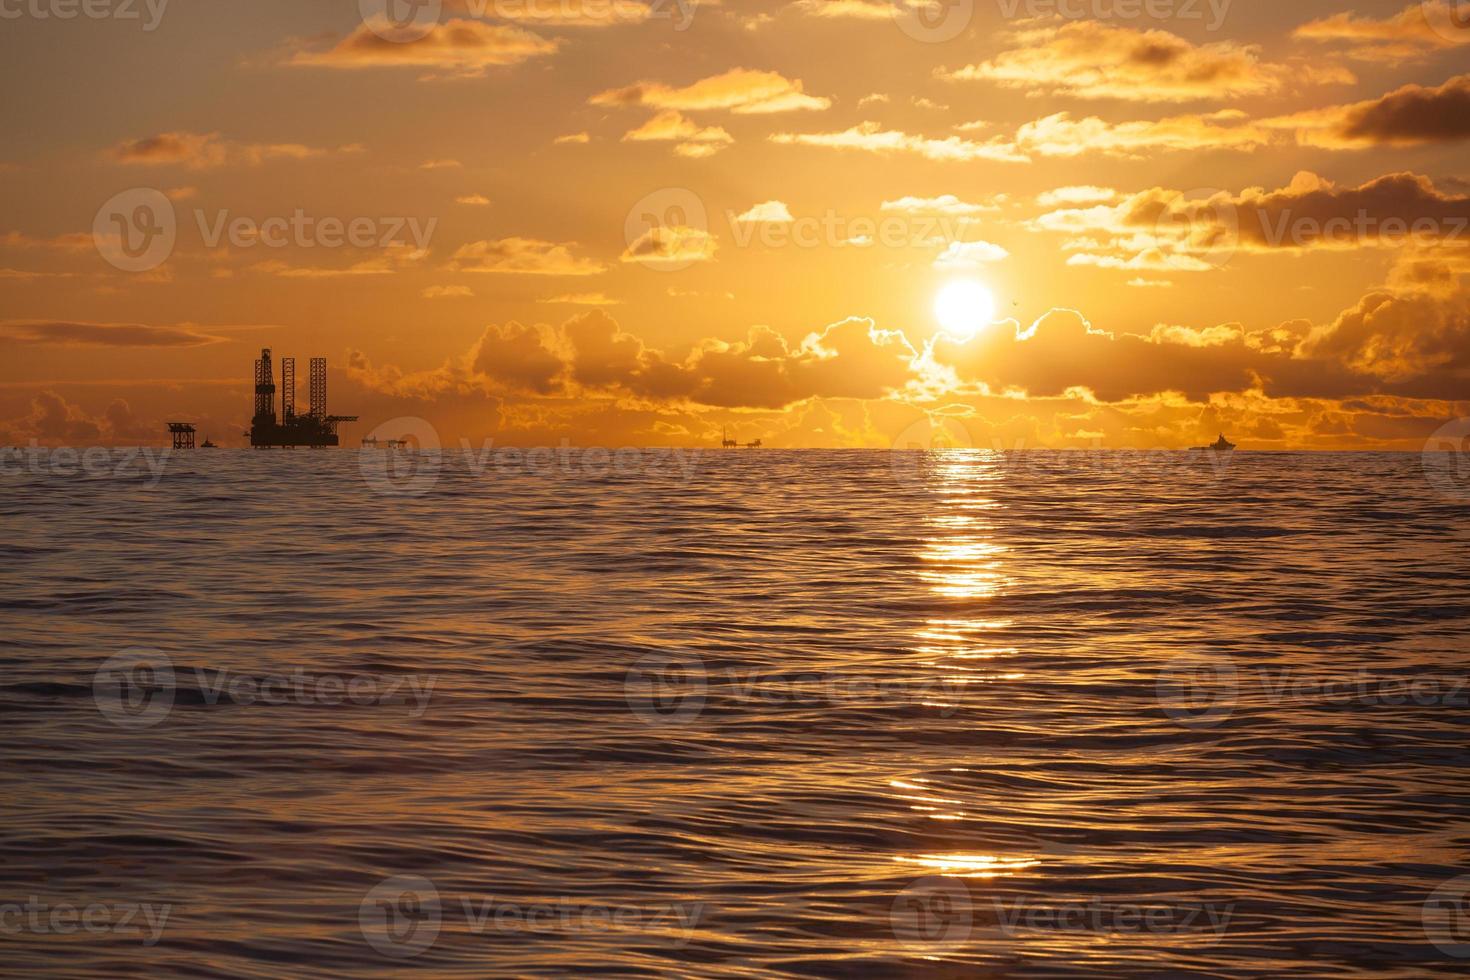 plataforma de petróleo no mar do norte foto